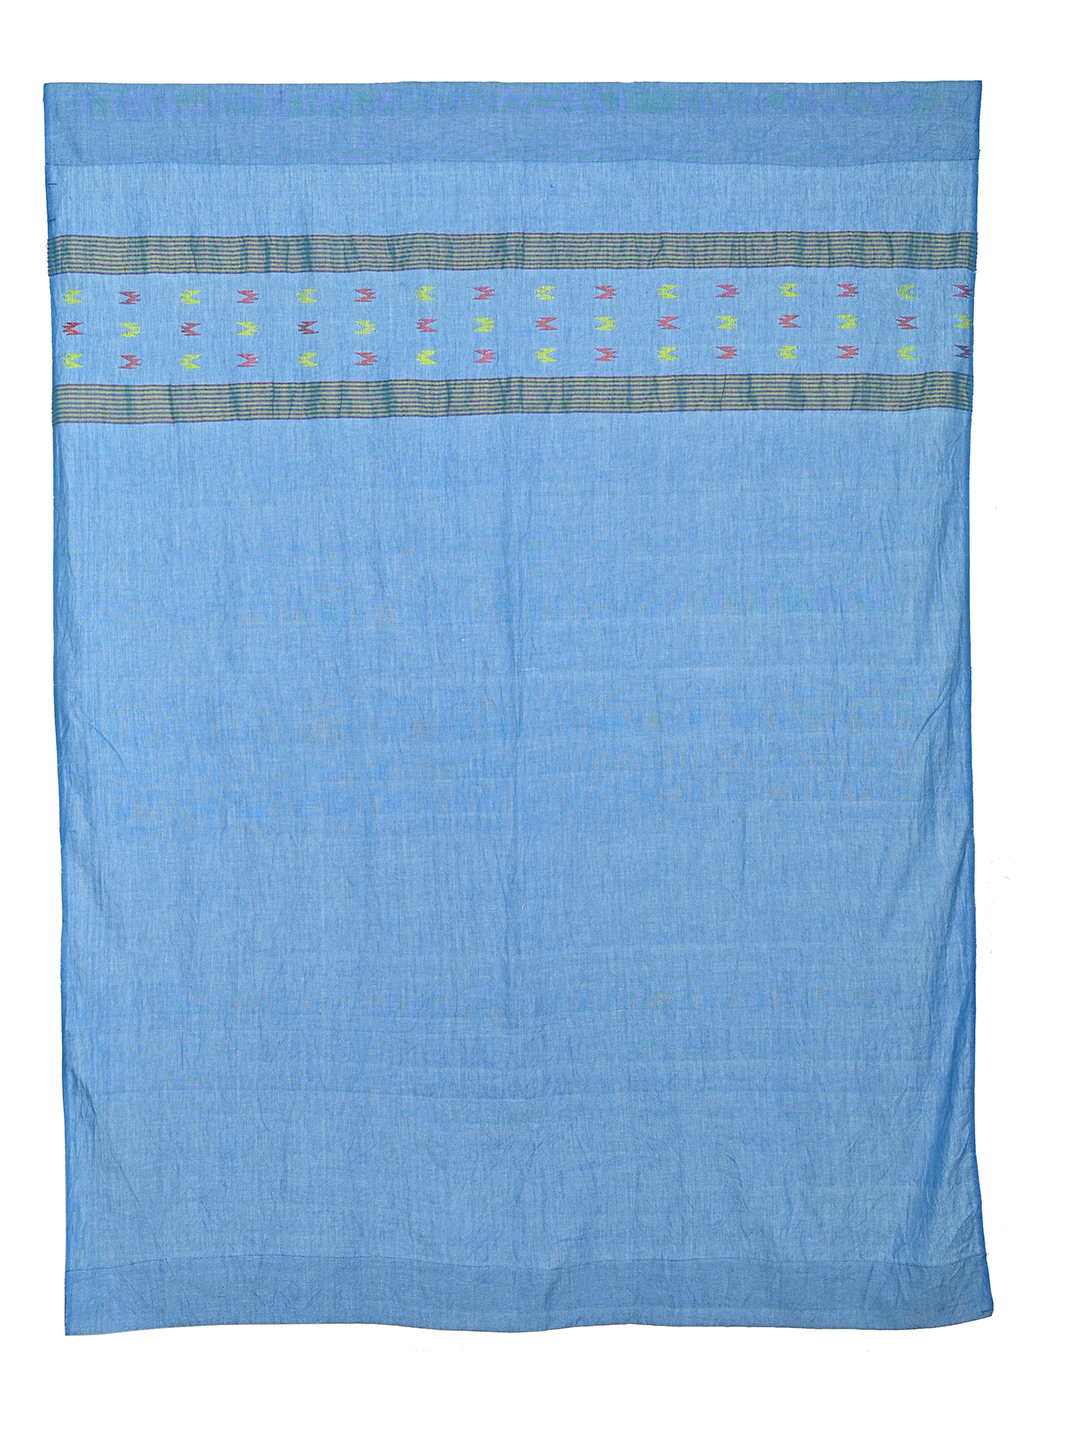 Indigo Blue Jamdani Cotton Door Curtain